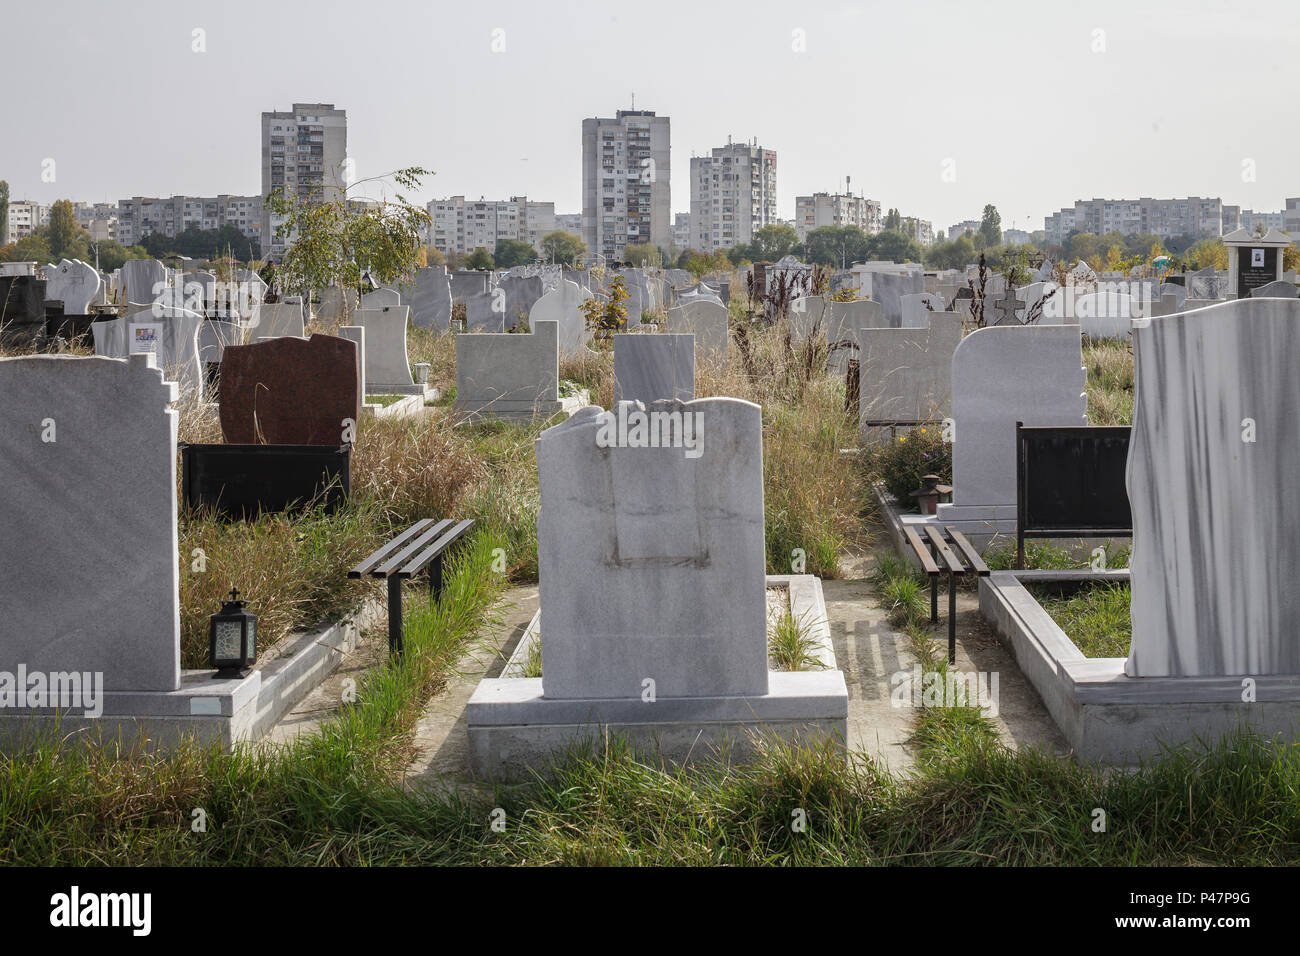 Sofia, Bulgaria, cemetery and prefabricated housing estate Stock Photo